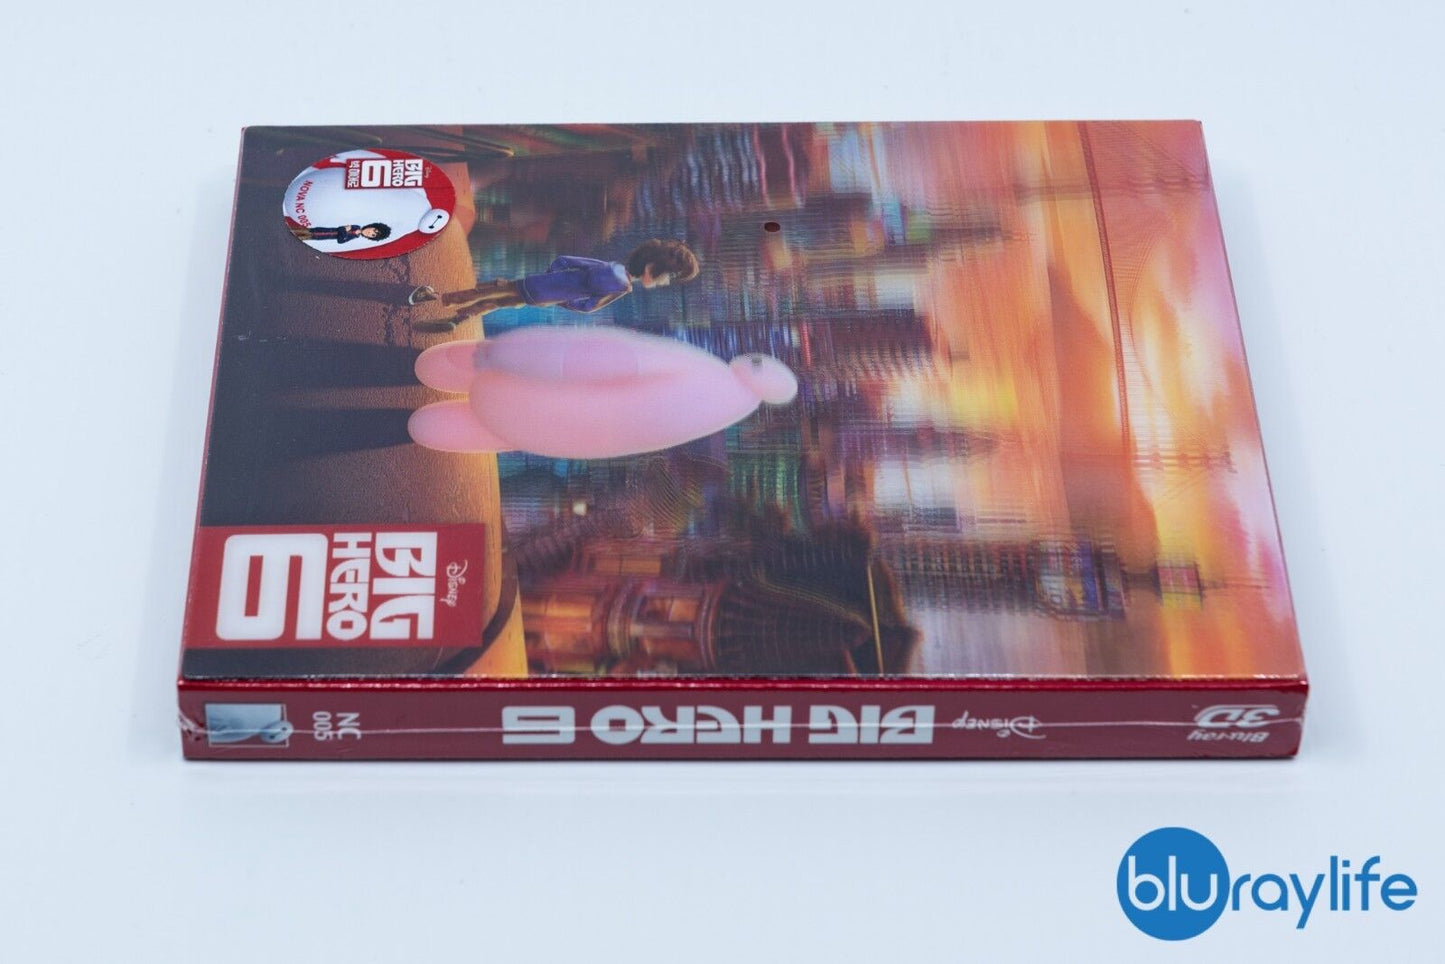 Big Hero 6 Blu-ray 3D+2D Blu-ray SteelBook Novamedia Choice #5 Lenticular Slip